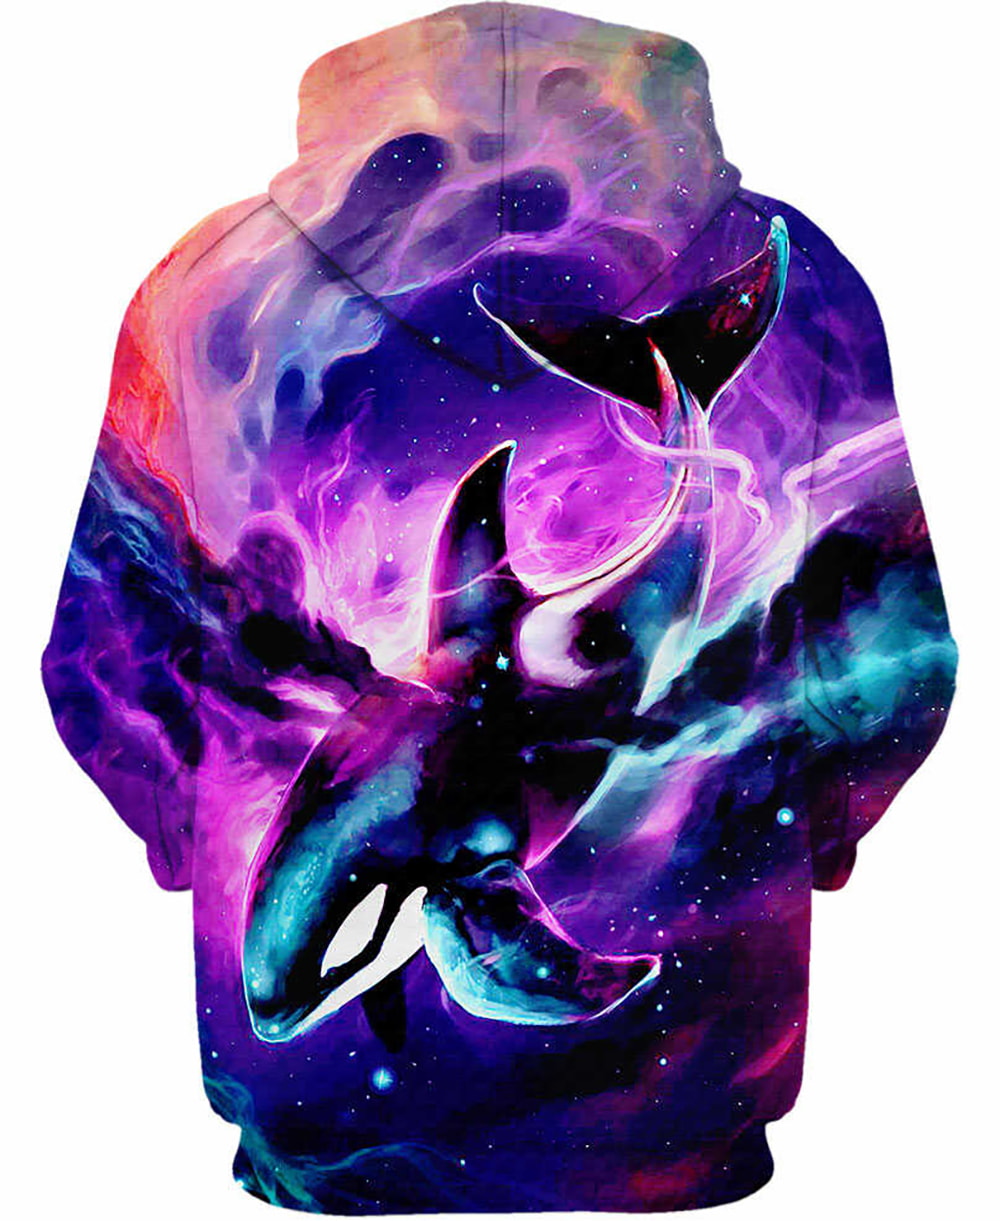 Cosmic Waves Orca Swimming 3D Hoodie, T-Shirt, Zip Hoodie, Sweatshirt For Men and Women